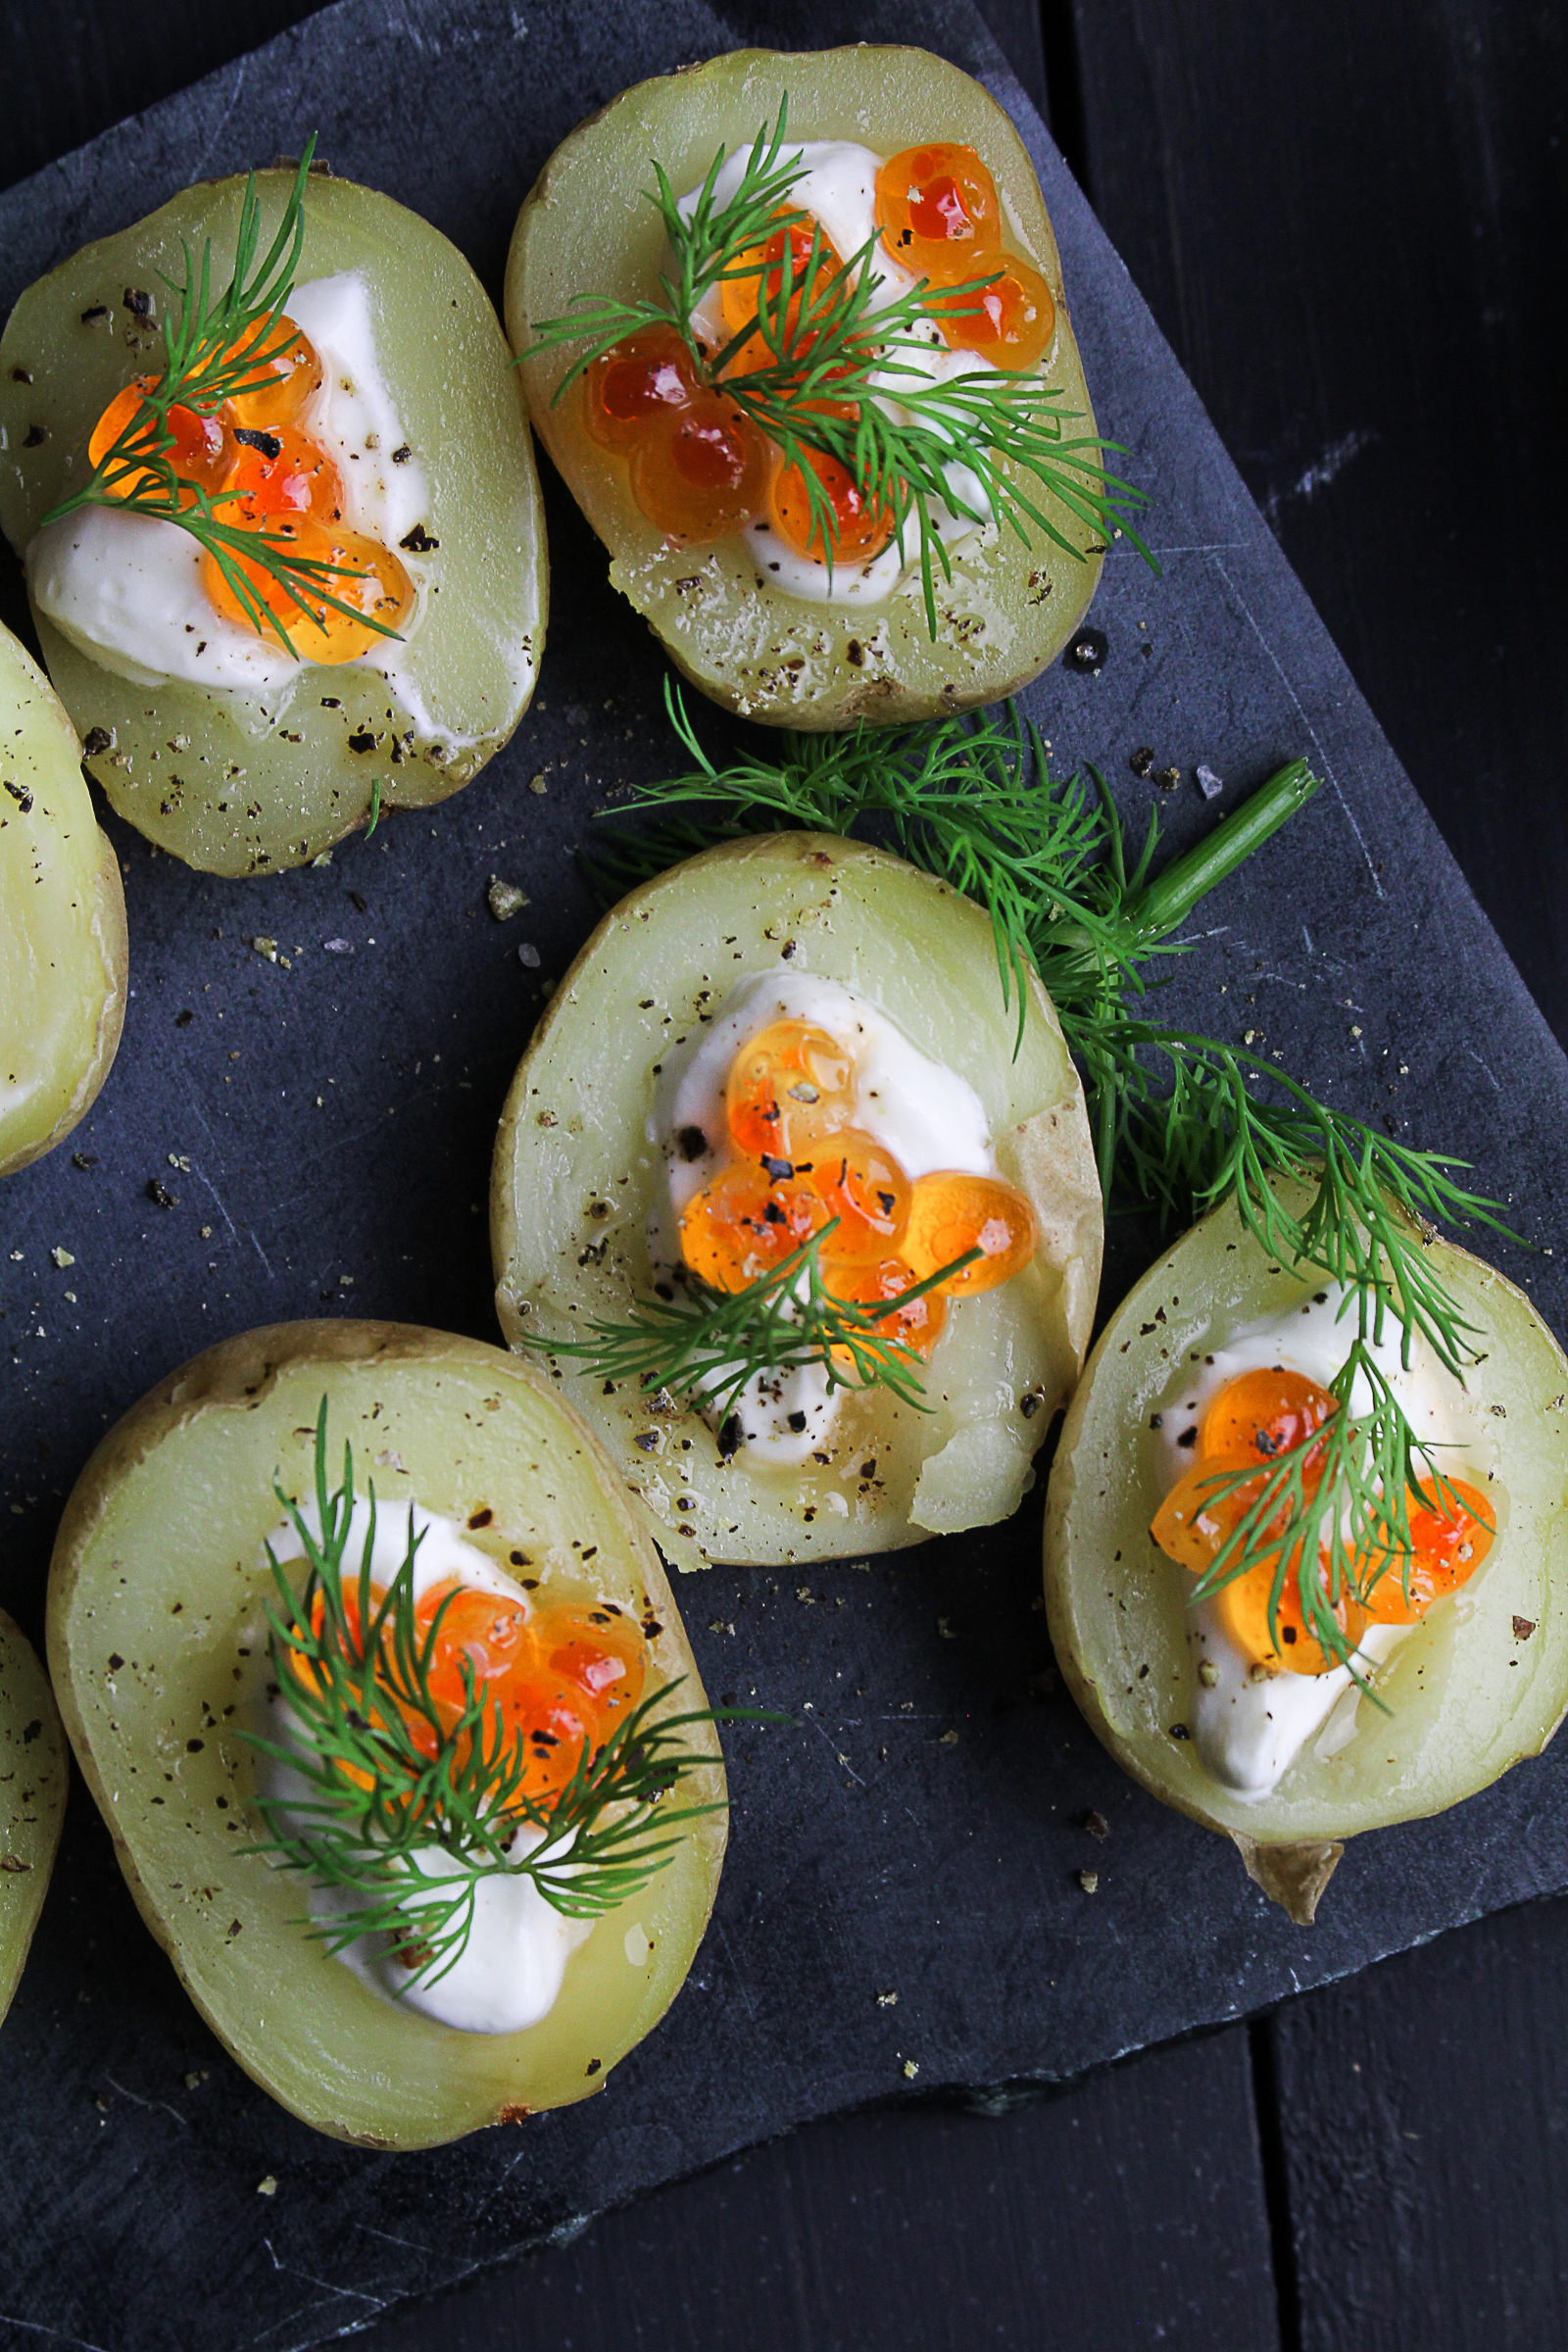 Russian New Year's Eve Menu - Potato Bites with Caviar